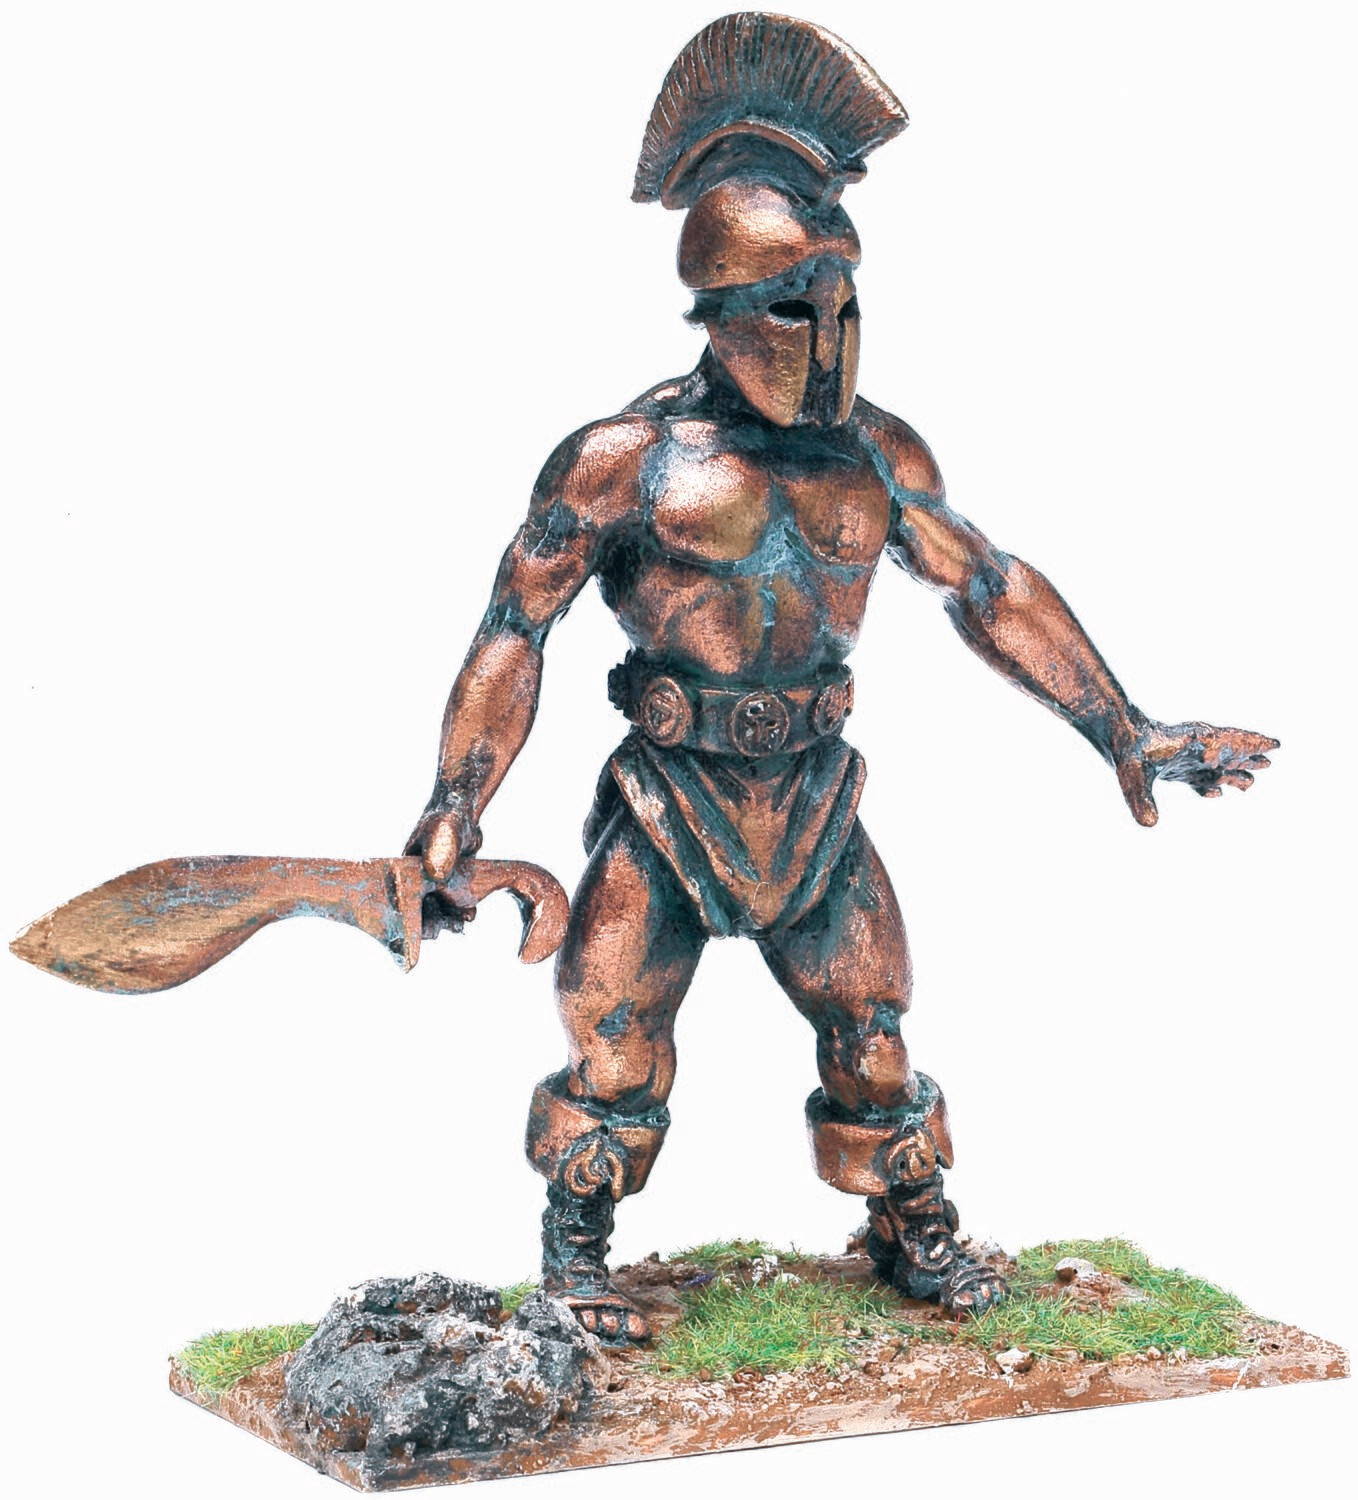 Talos the man of bronze